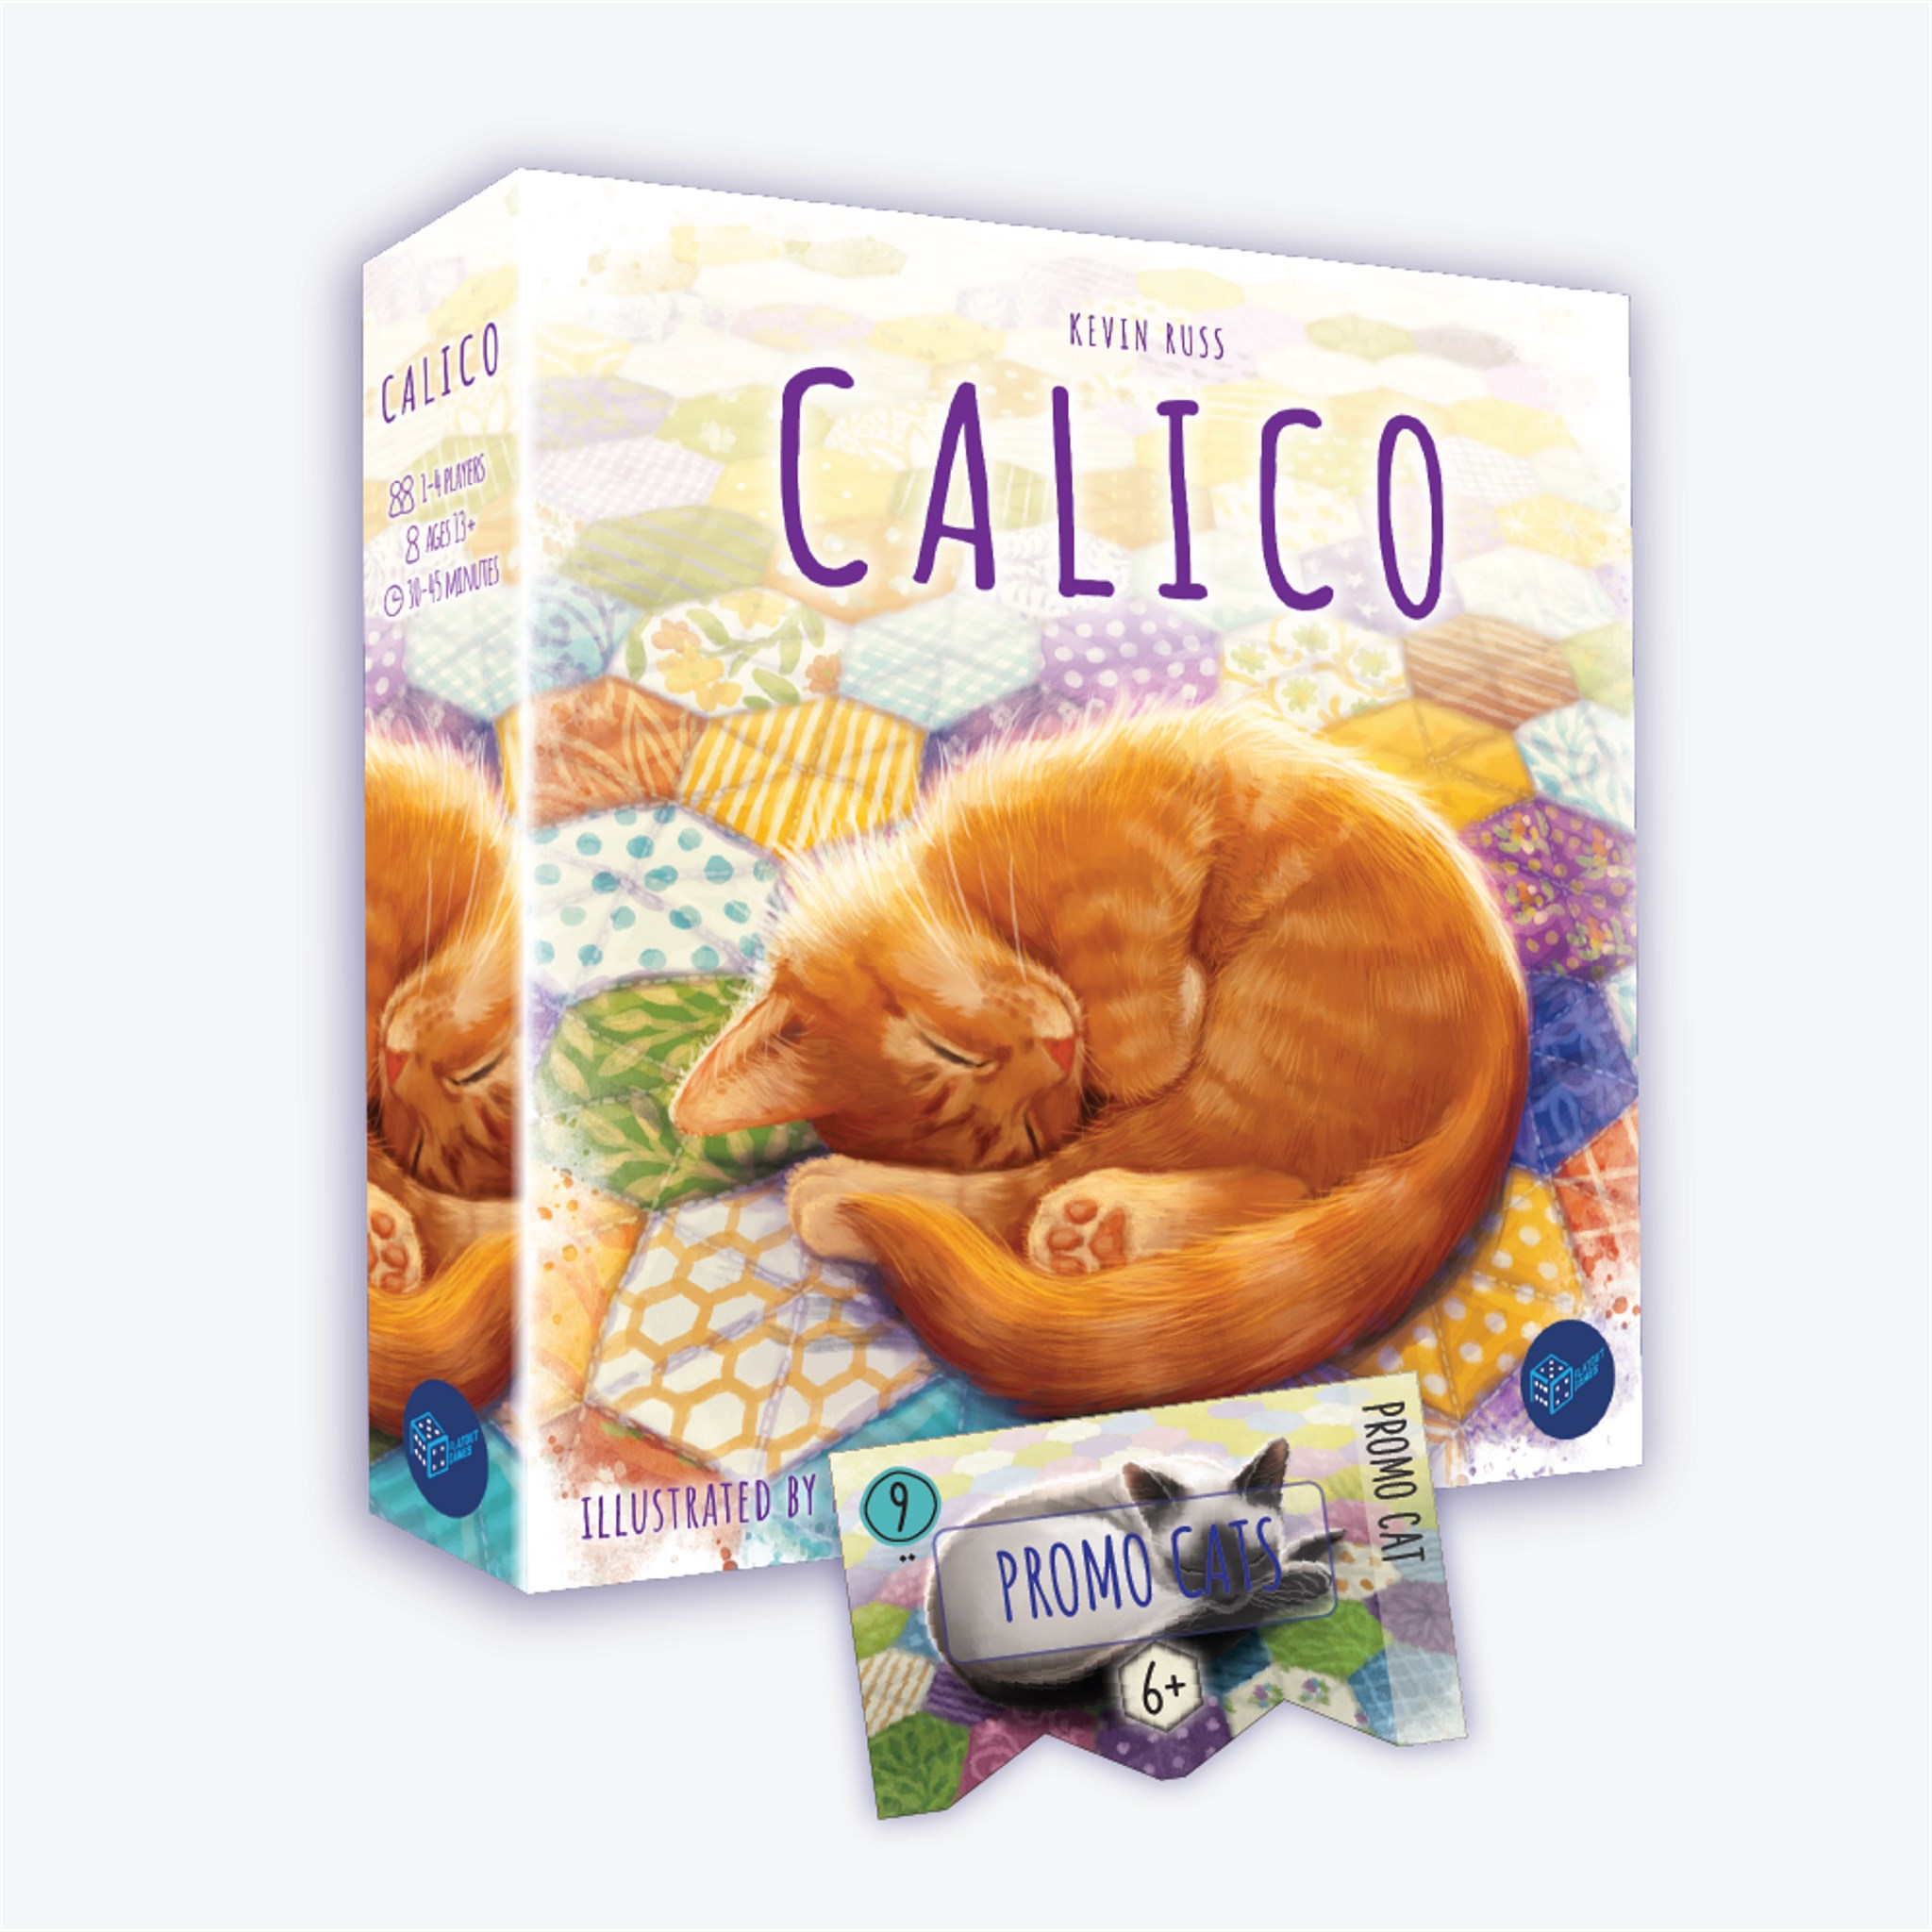 Calico Kickstarter Exclusive Edition w/ Promo KS Cats